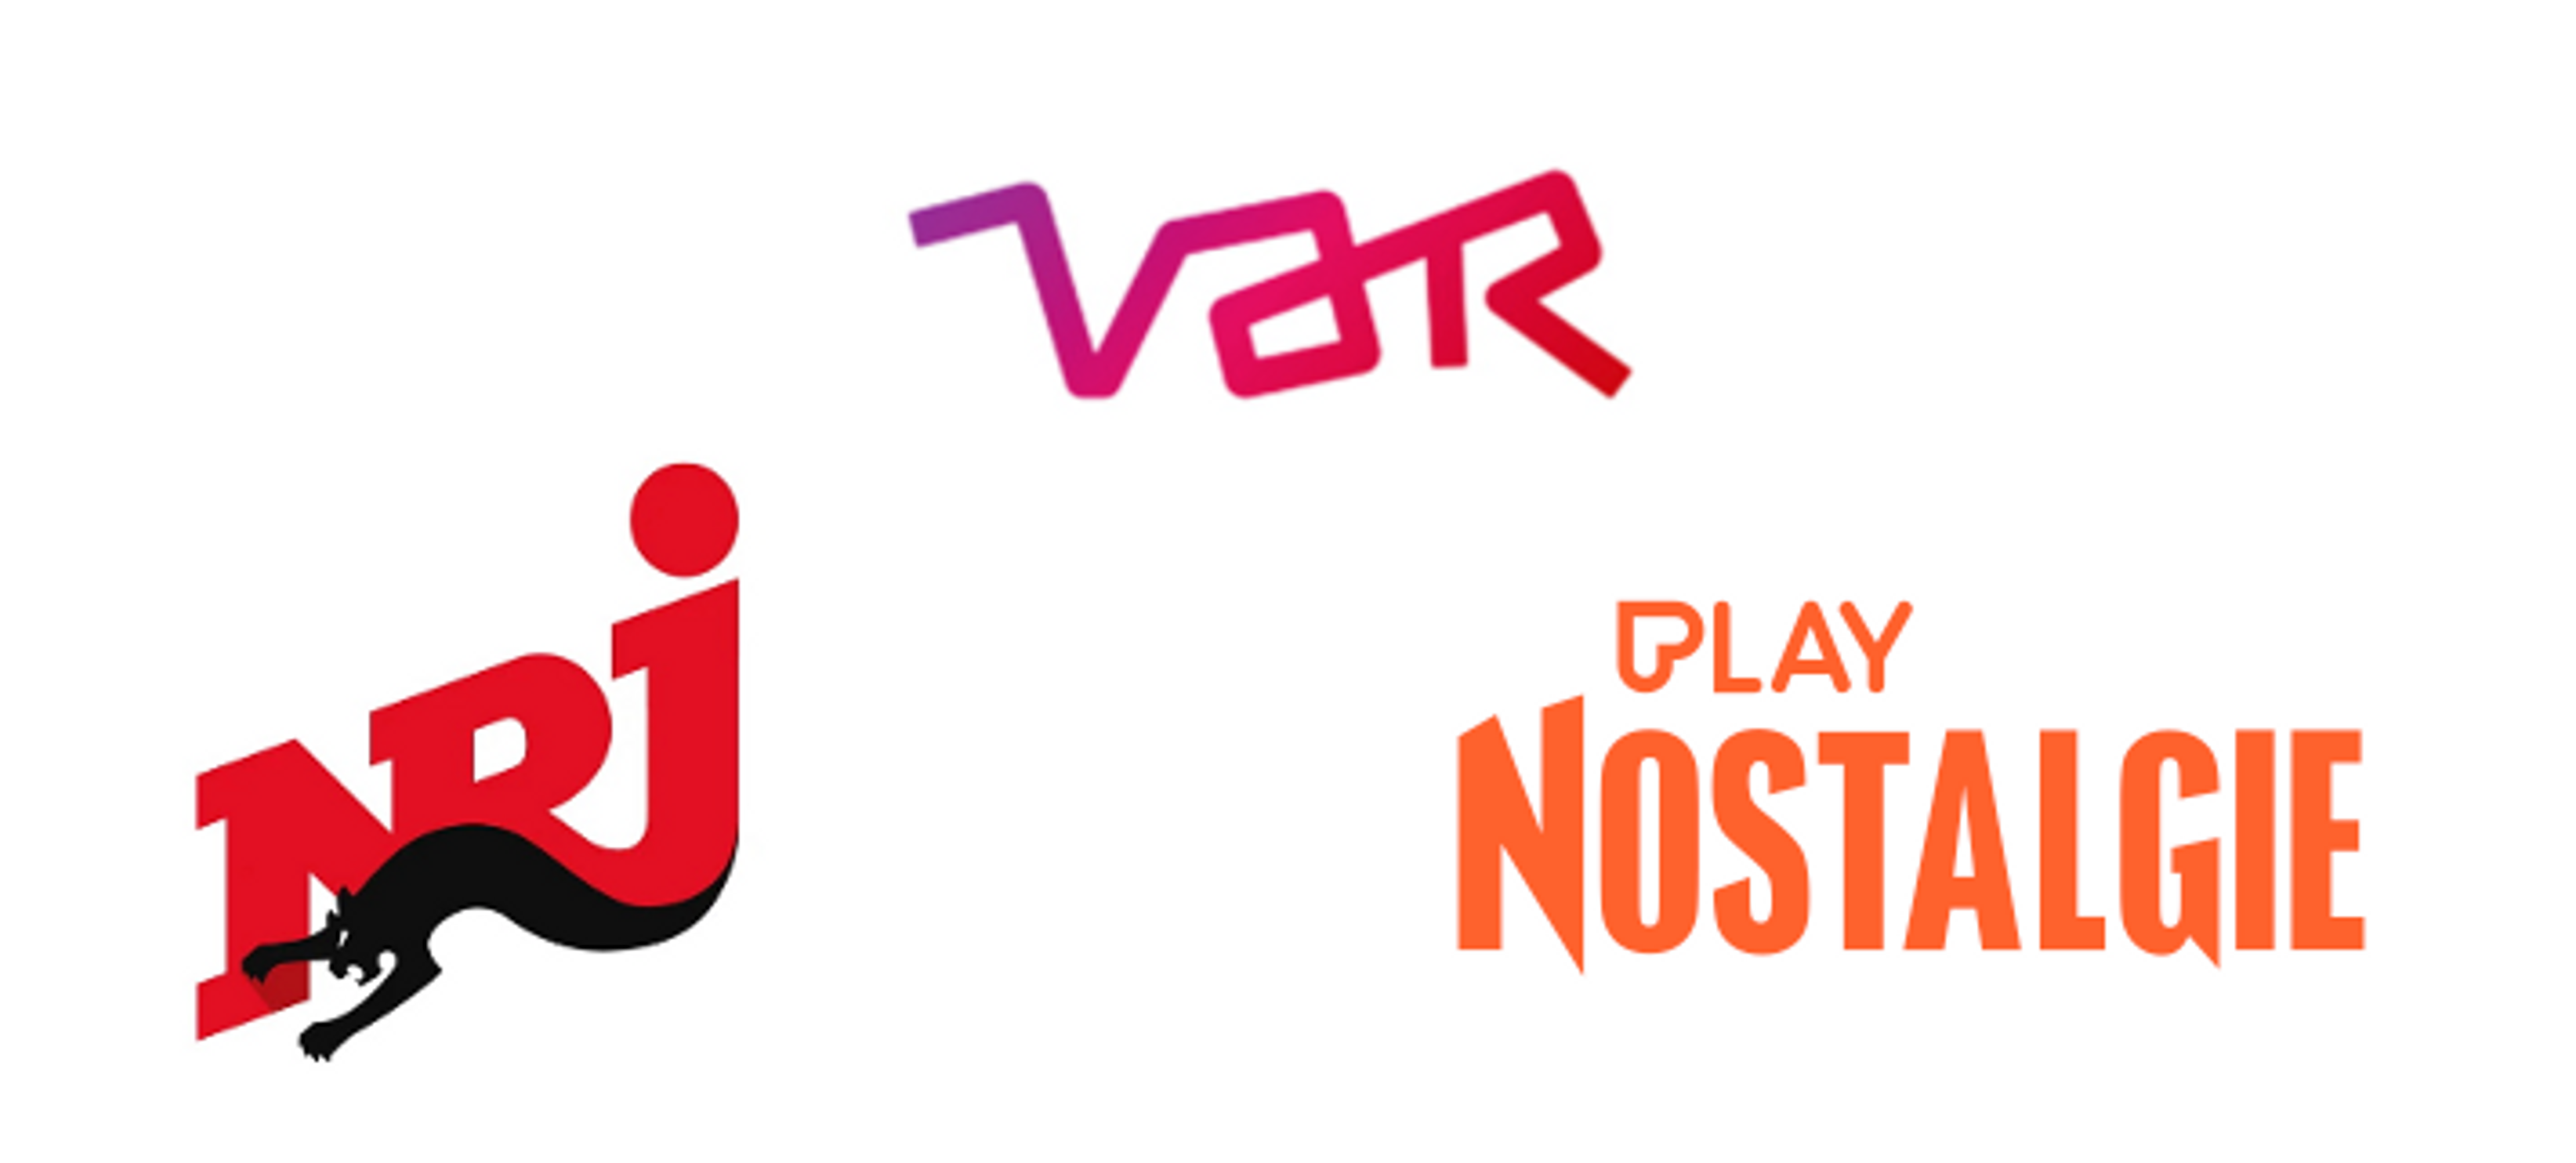 Play Nostalgie - NRJ - VAR